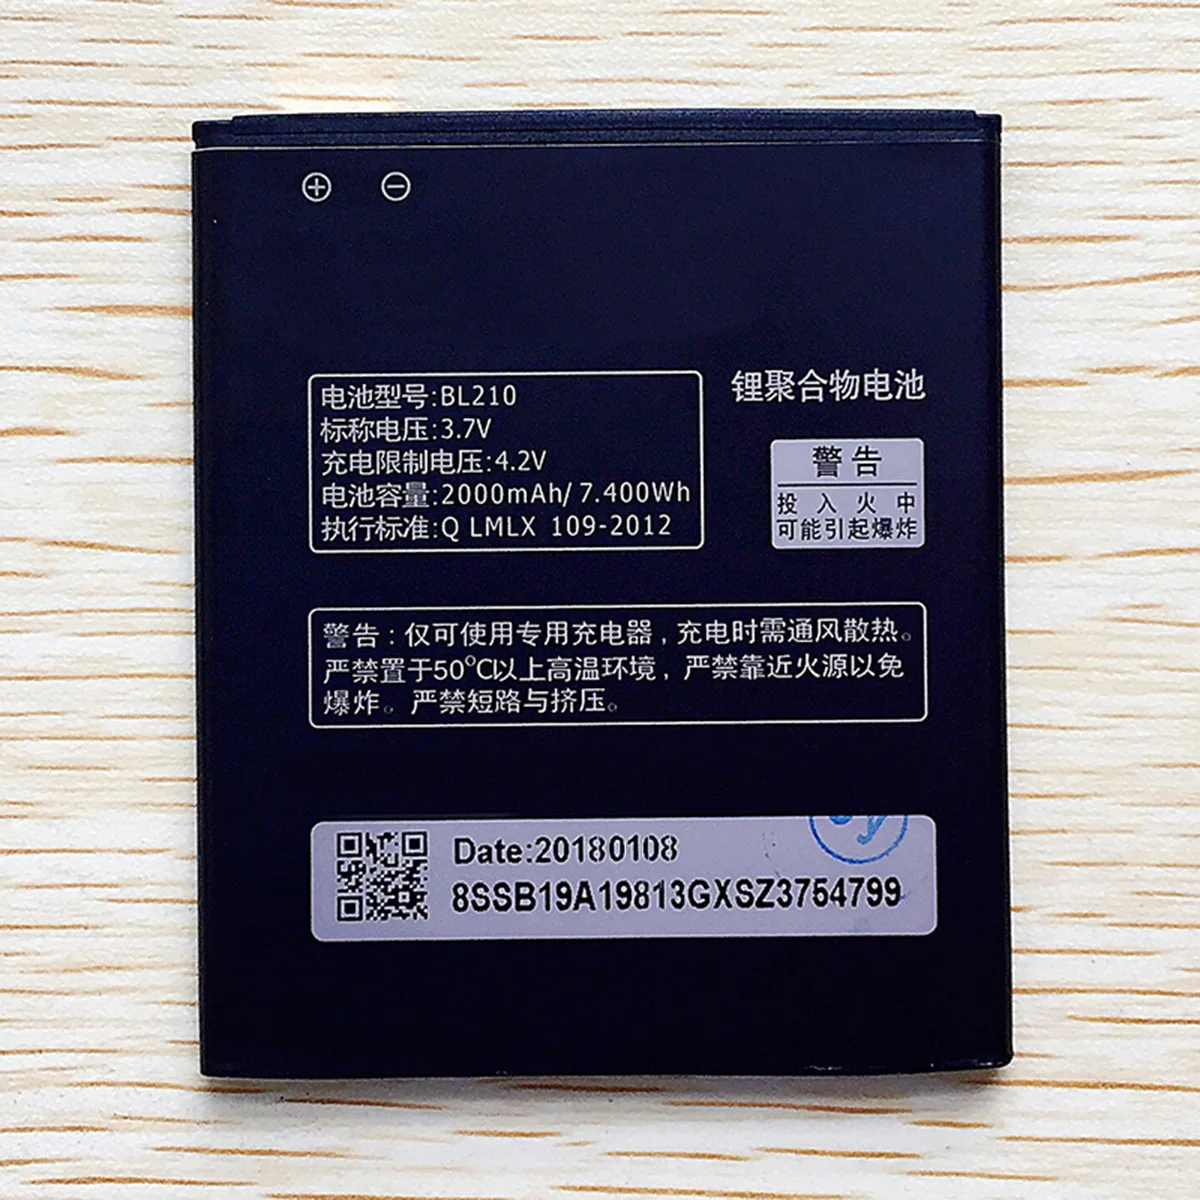 cuusey новые BL210 для lenovo A536 A606 A750E A770E A656 A766 A658T S820 S820E S650 запчасть для мобильного телефона мА/ч. аккумулятор 2000 мАч